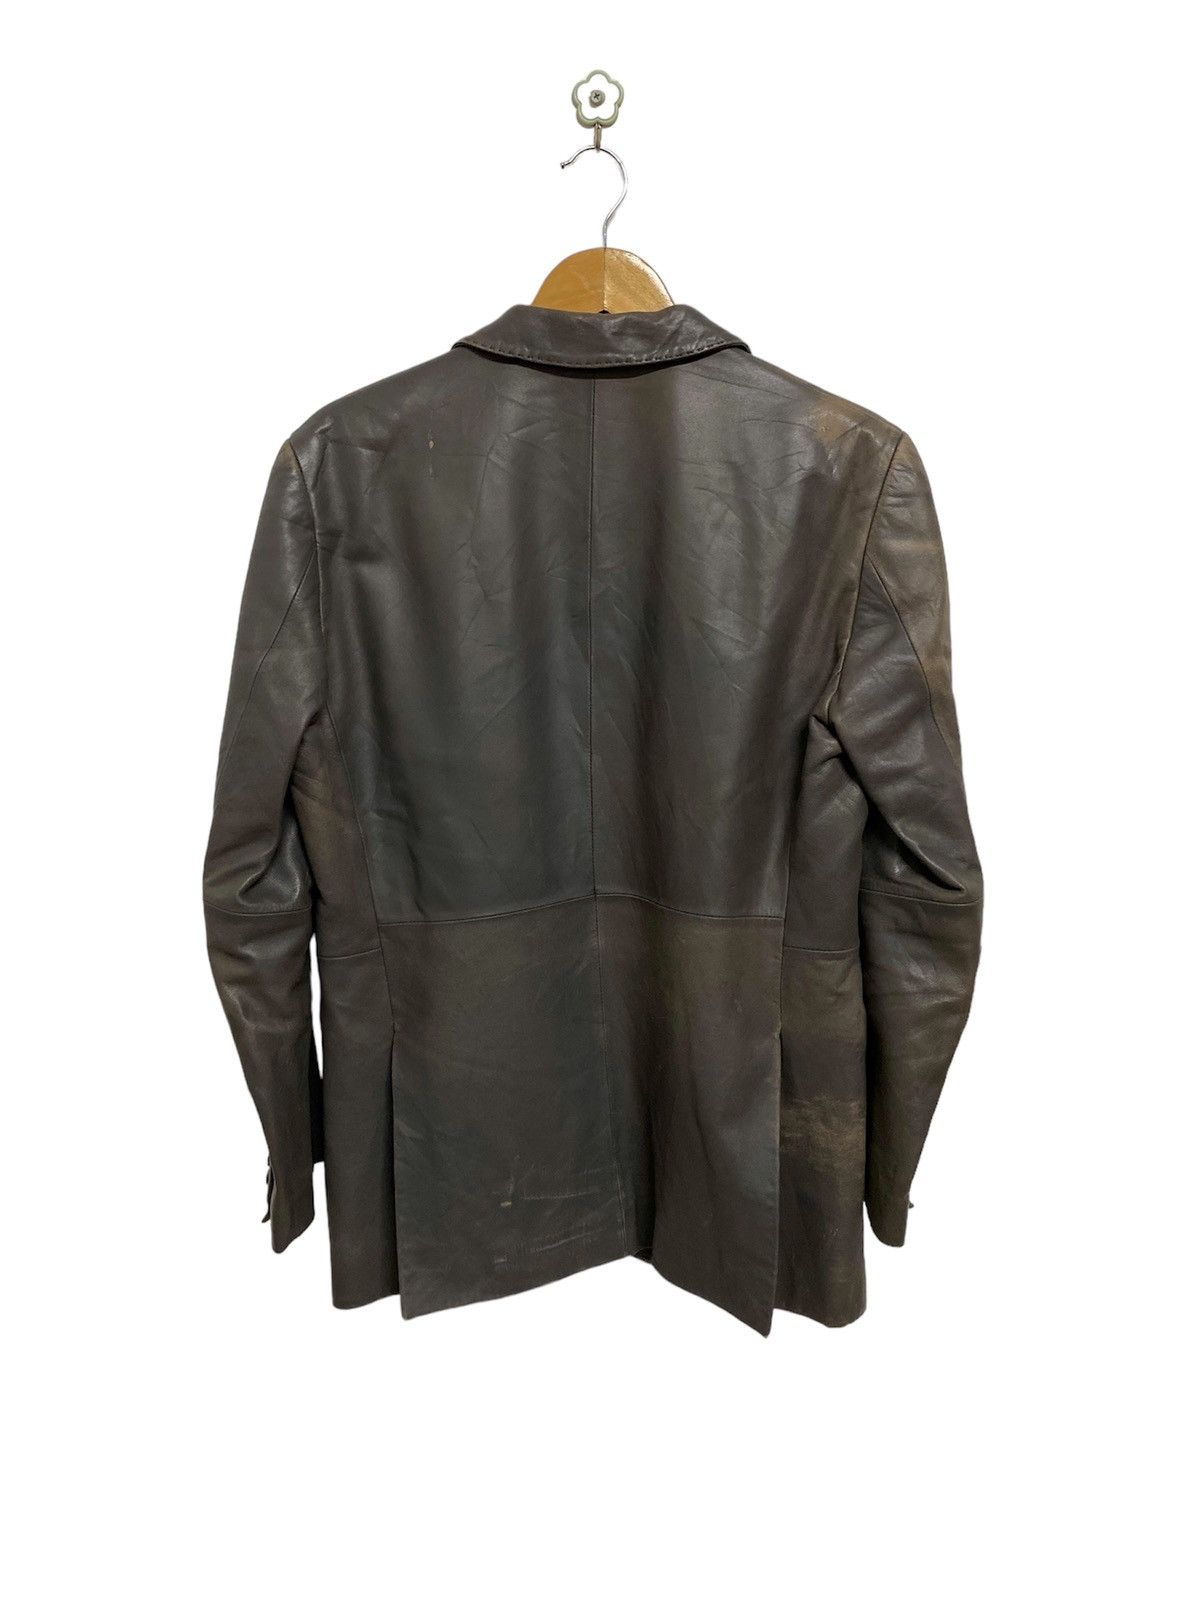 Cerruti 1881 Lambskin Leather Jacket - 5